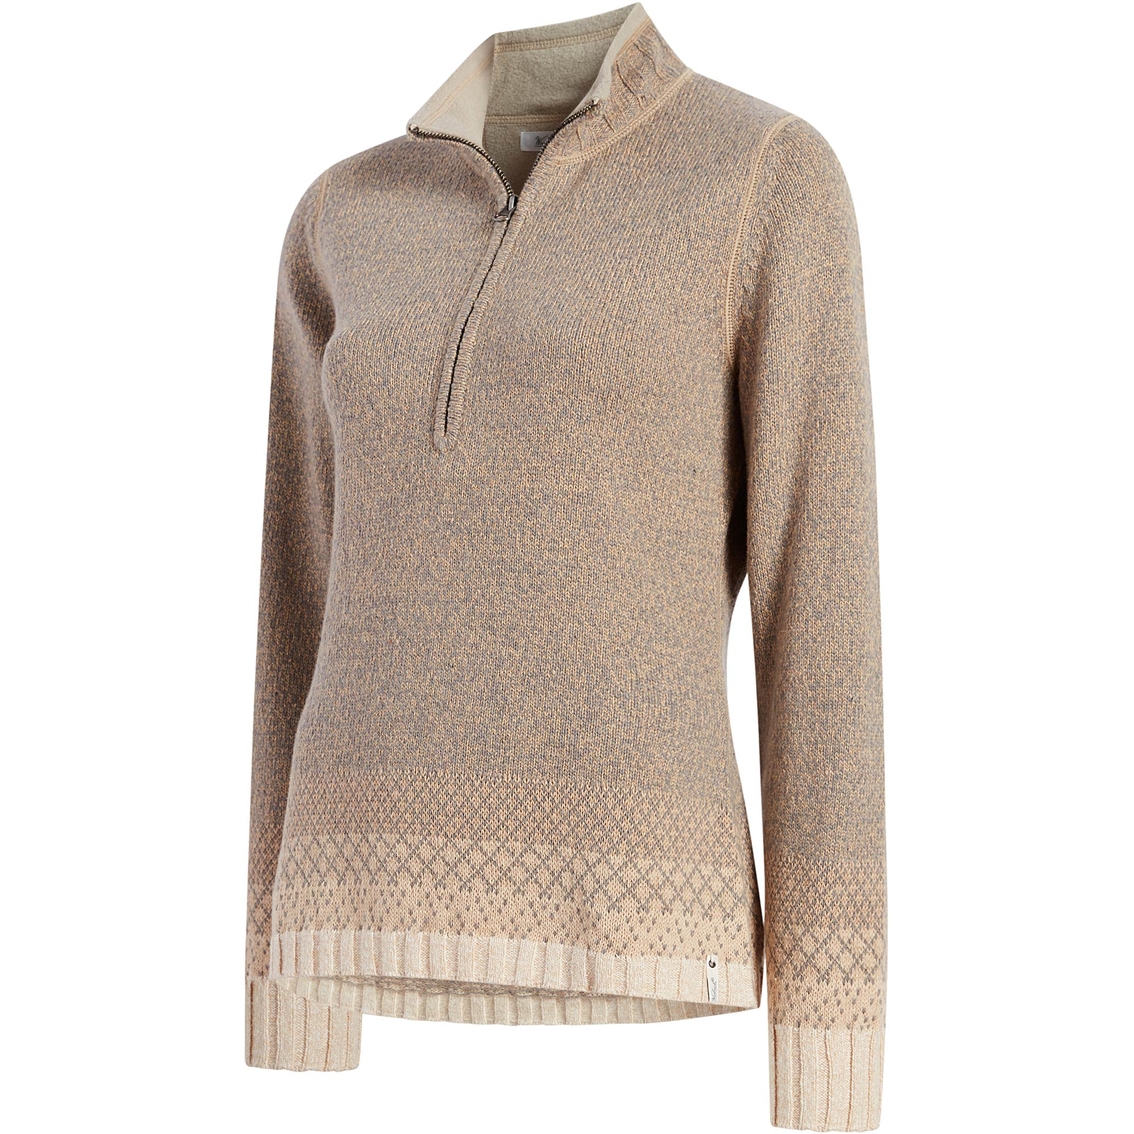 Woolrich Tanglewood Half Zip II Sweater - Image 2 of 3